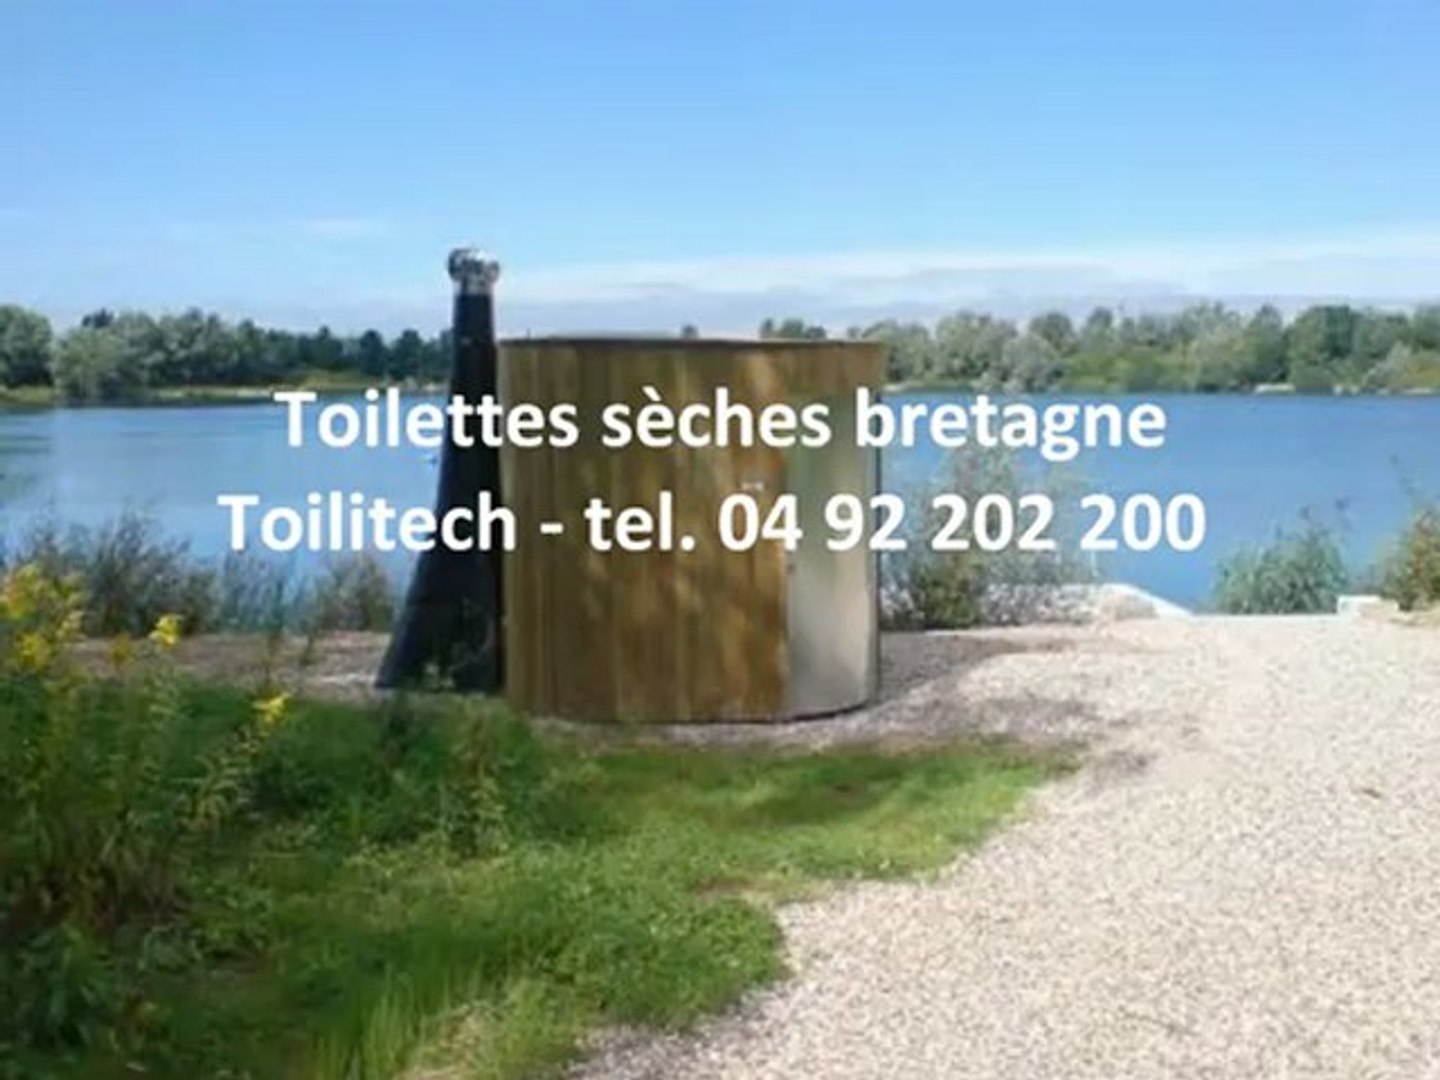 Toilettes sèches bretagne avec Toilitech - tel : 04 92 202 200. toilettes  sèches bretagne. - Vidéo Dailymotion